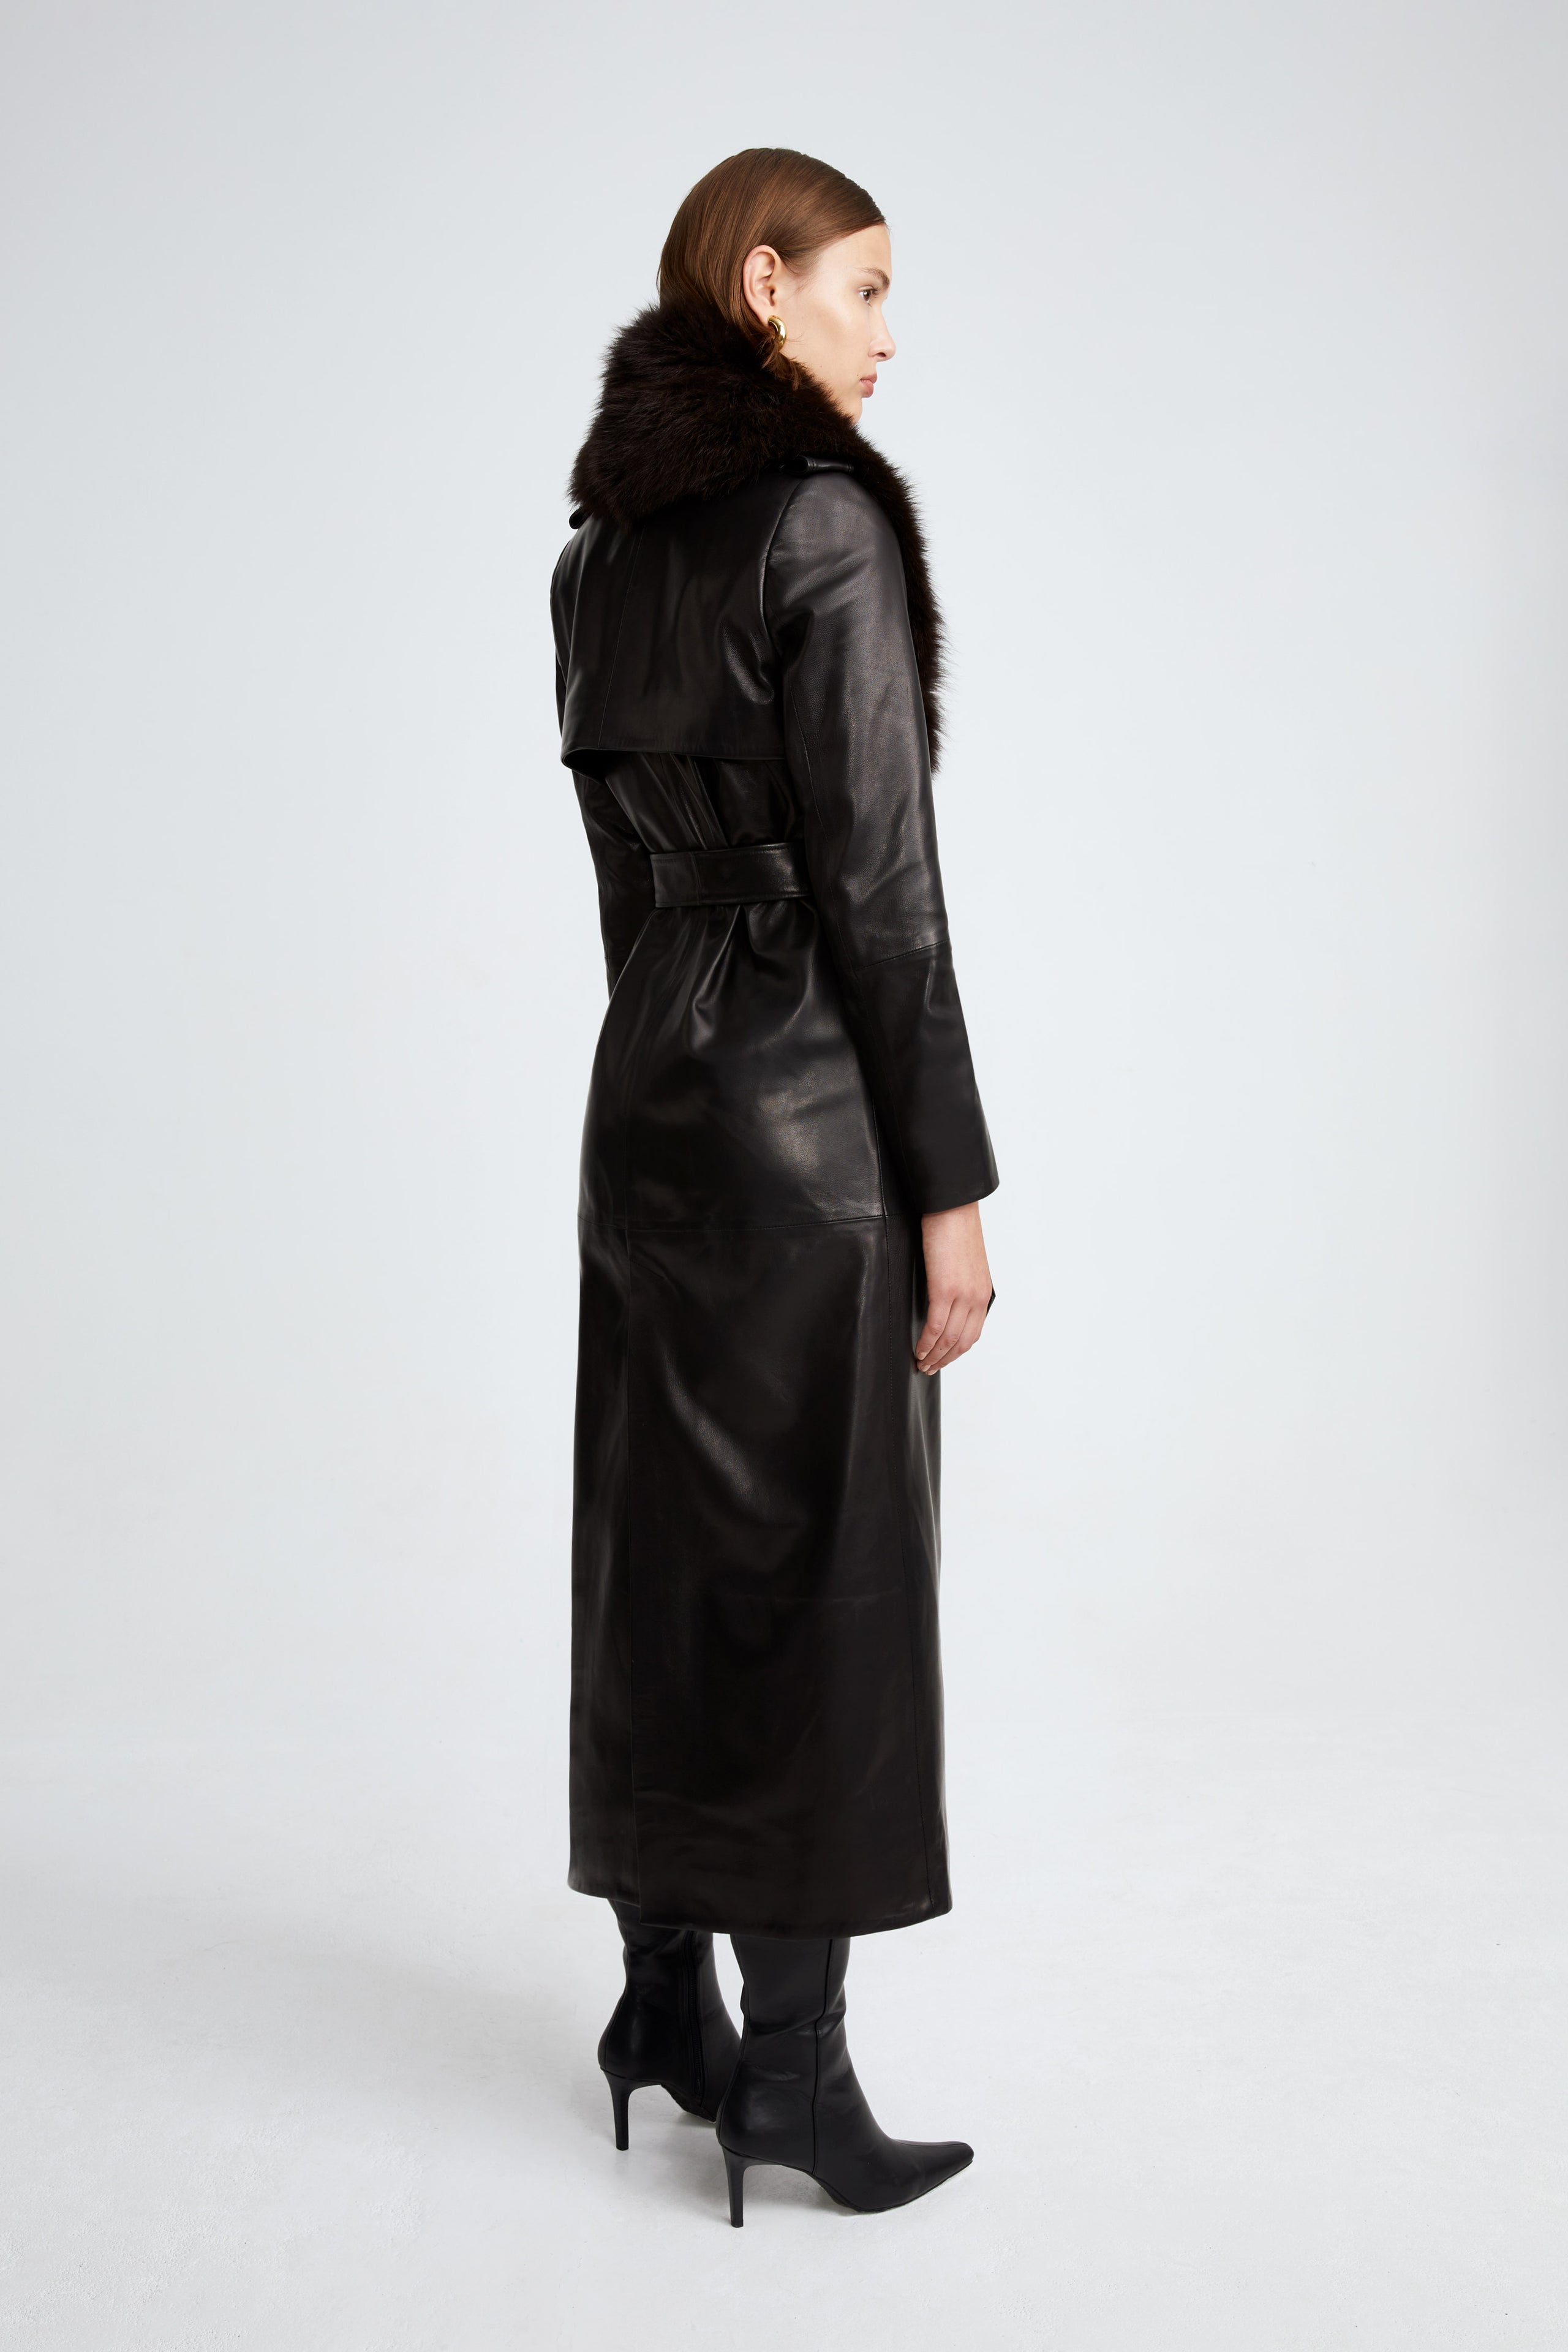 Model is wearing the Dakota Black Espresso Glamorous Leather Trench Side